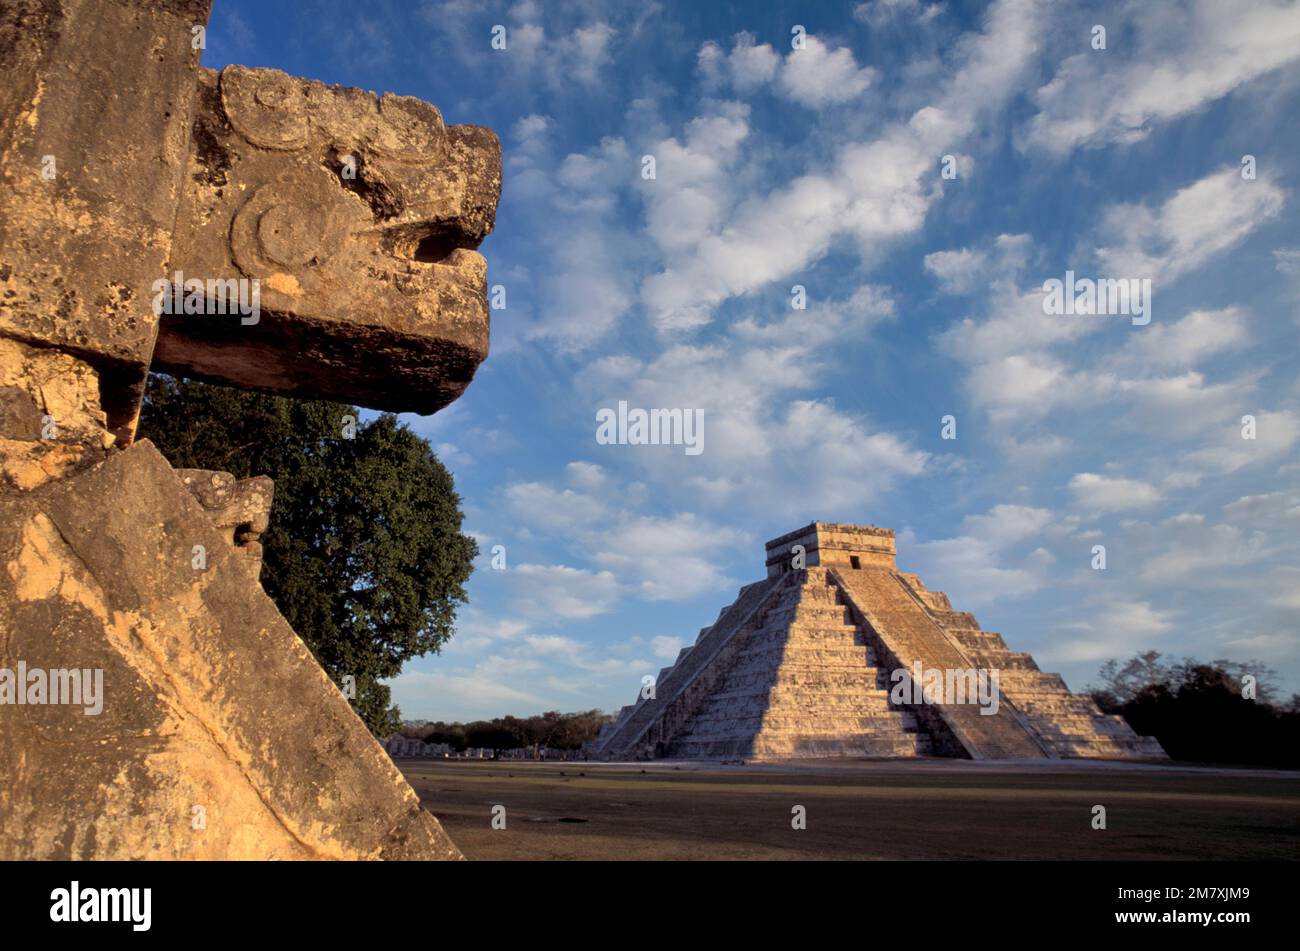 Pyramid de Kukukan, site Maya, site archéologique de Chichen Itza, Estado de Yucatan, Mexique Banque D'Images